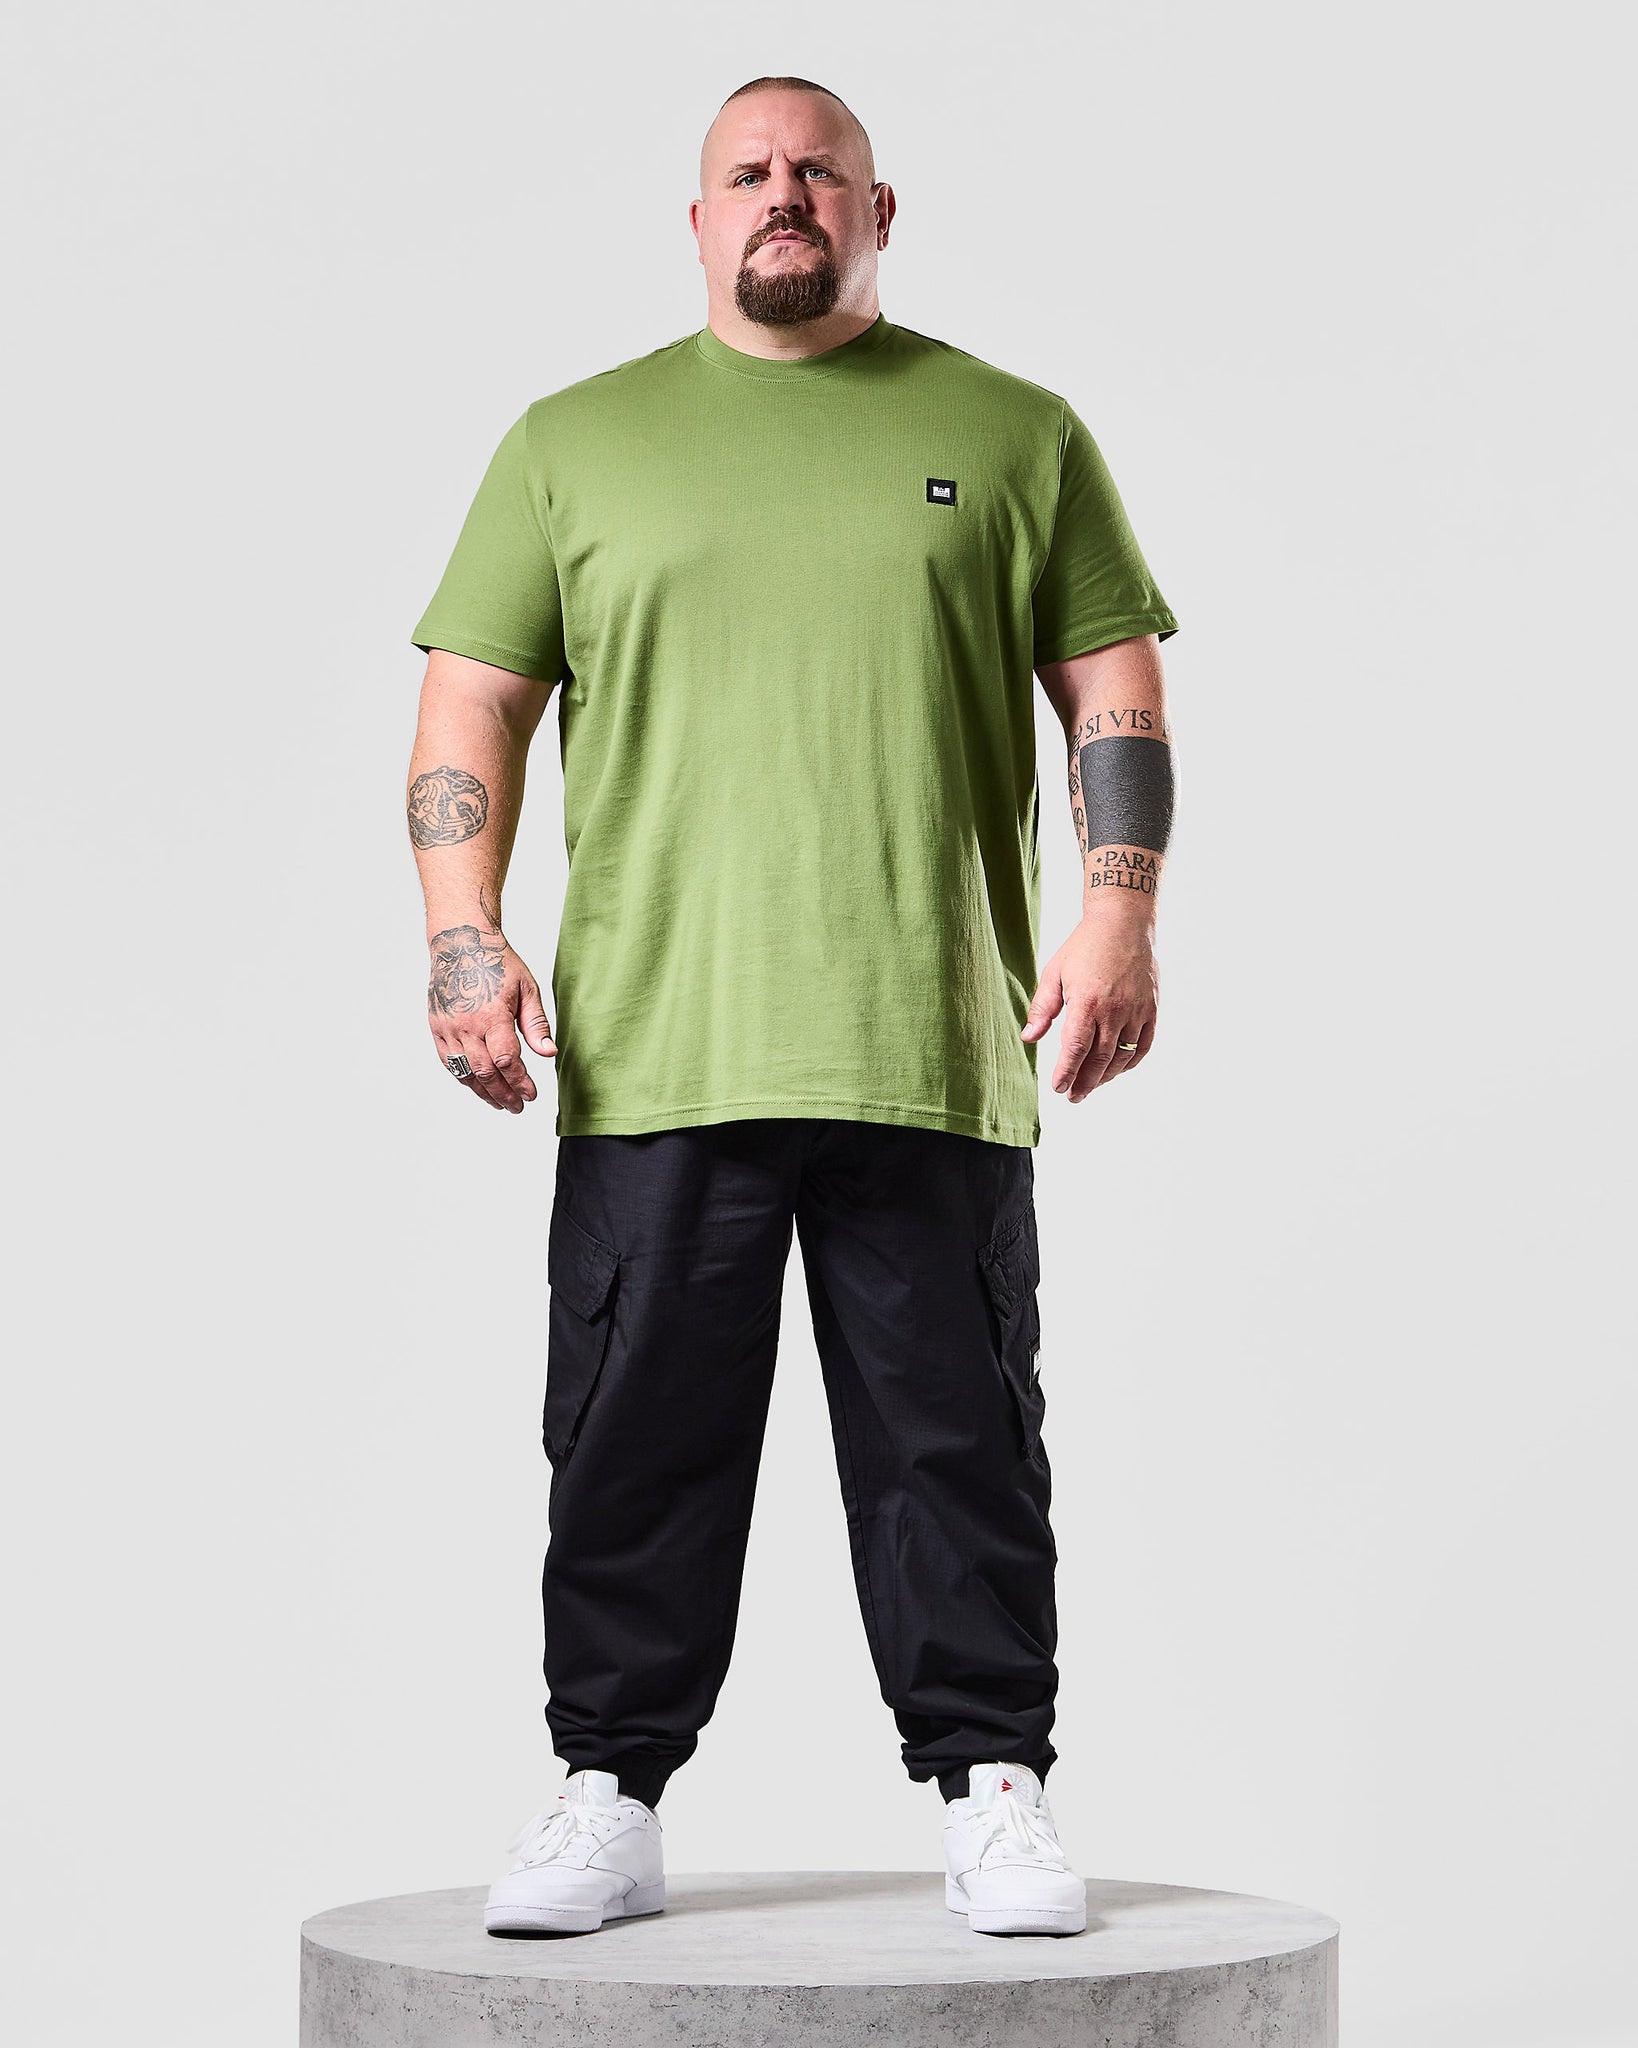 Cannon Beach T-Shirt Seaweed Green - Plus Size